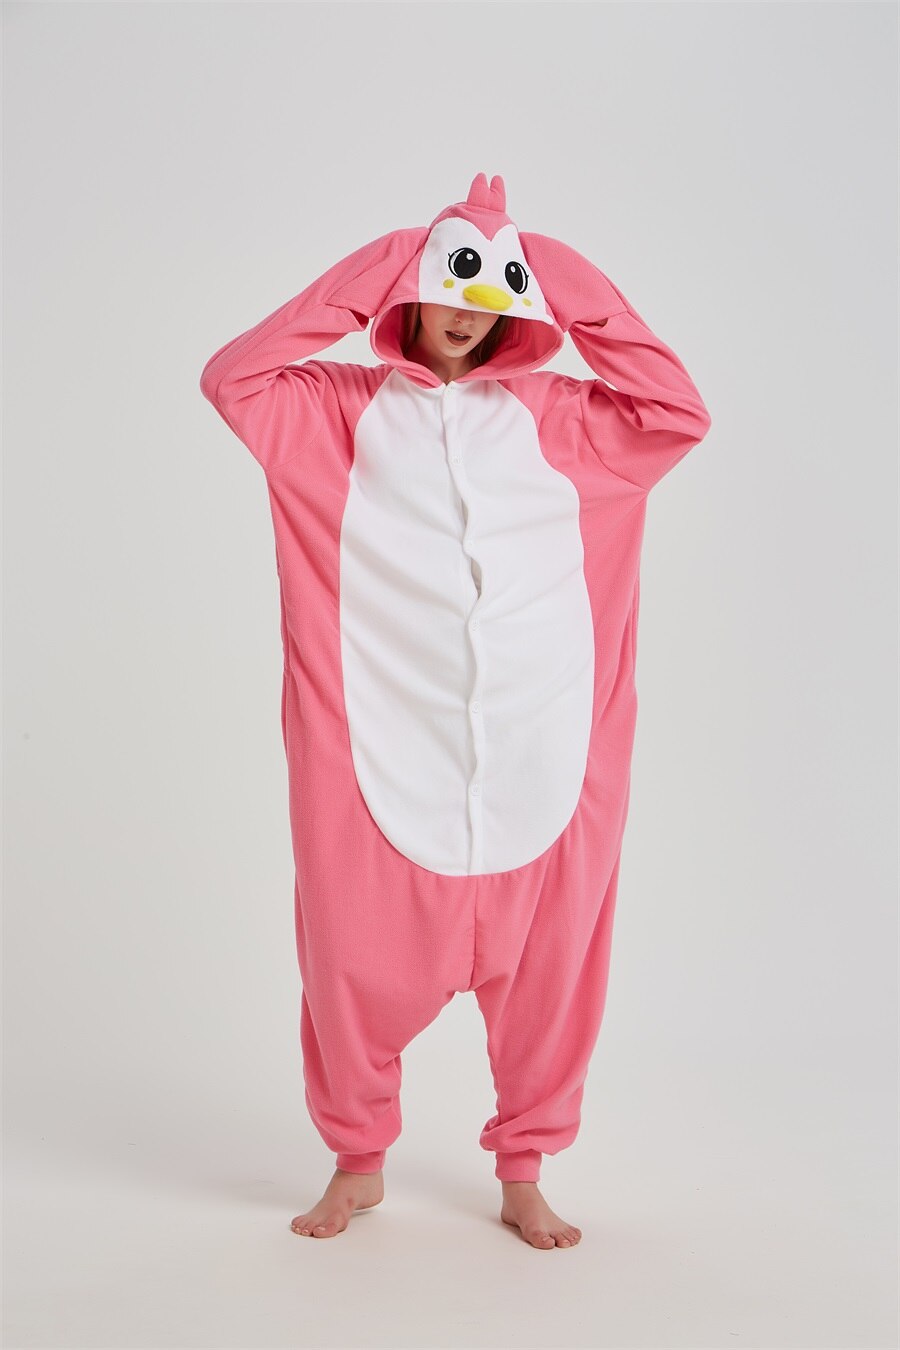 Unisex Penguin Kigurumis Women Pink Onesies Adult Winter Pajama Cute Jumpsuit Polar Fleece Animal Overalls Halloween Suit